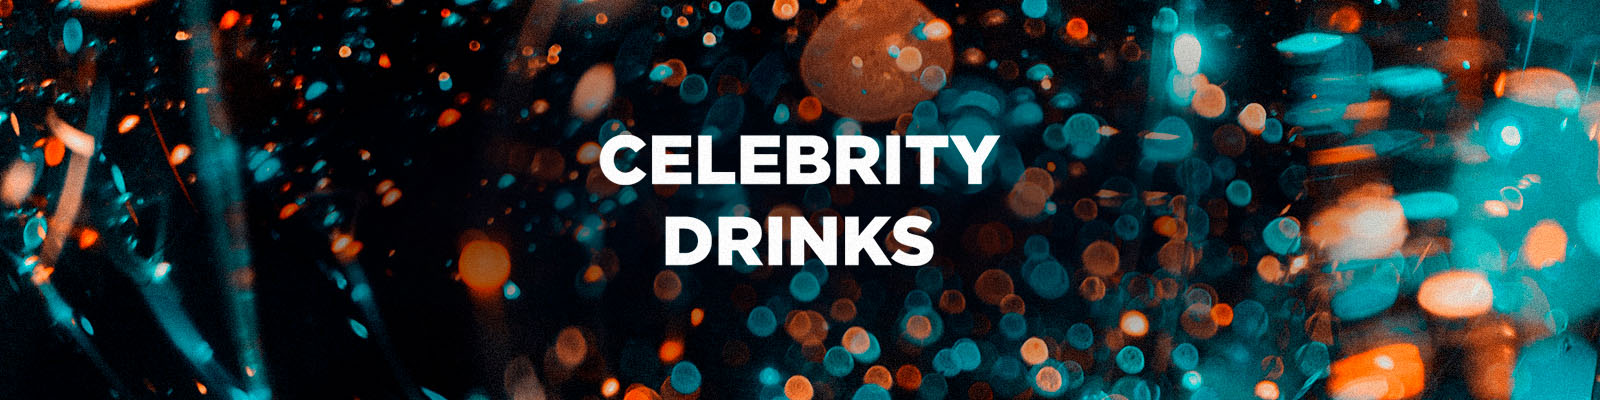 Celebrity Drinks